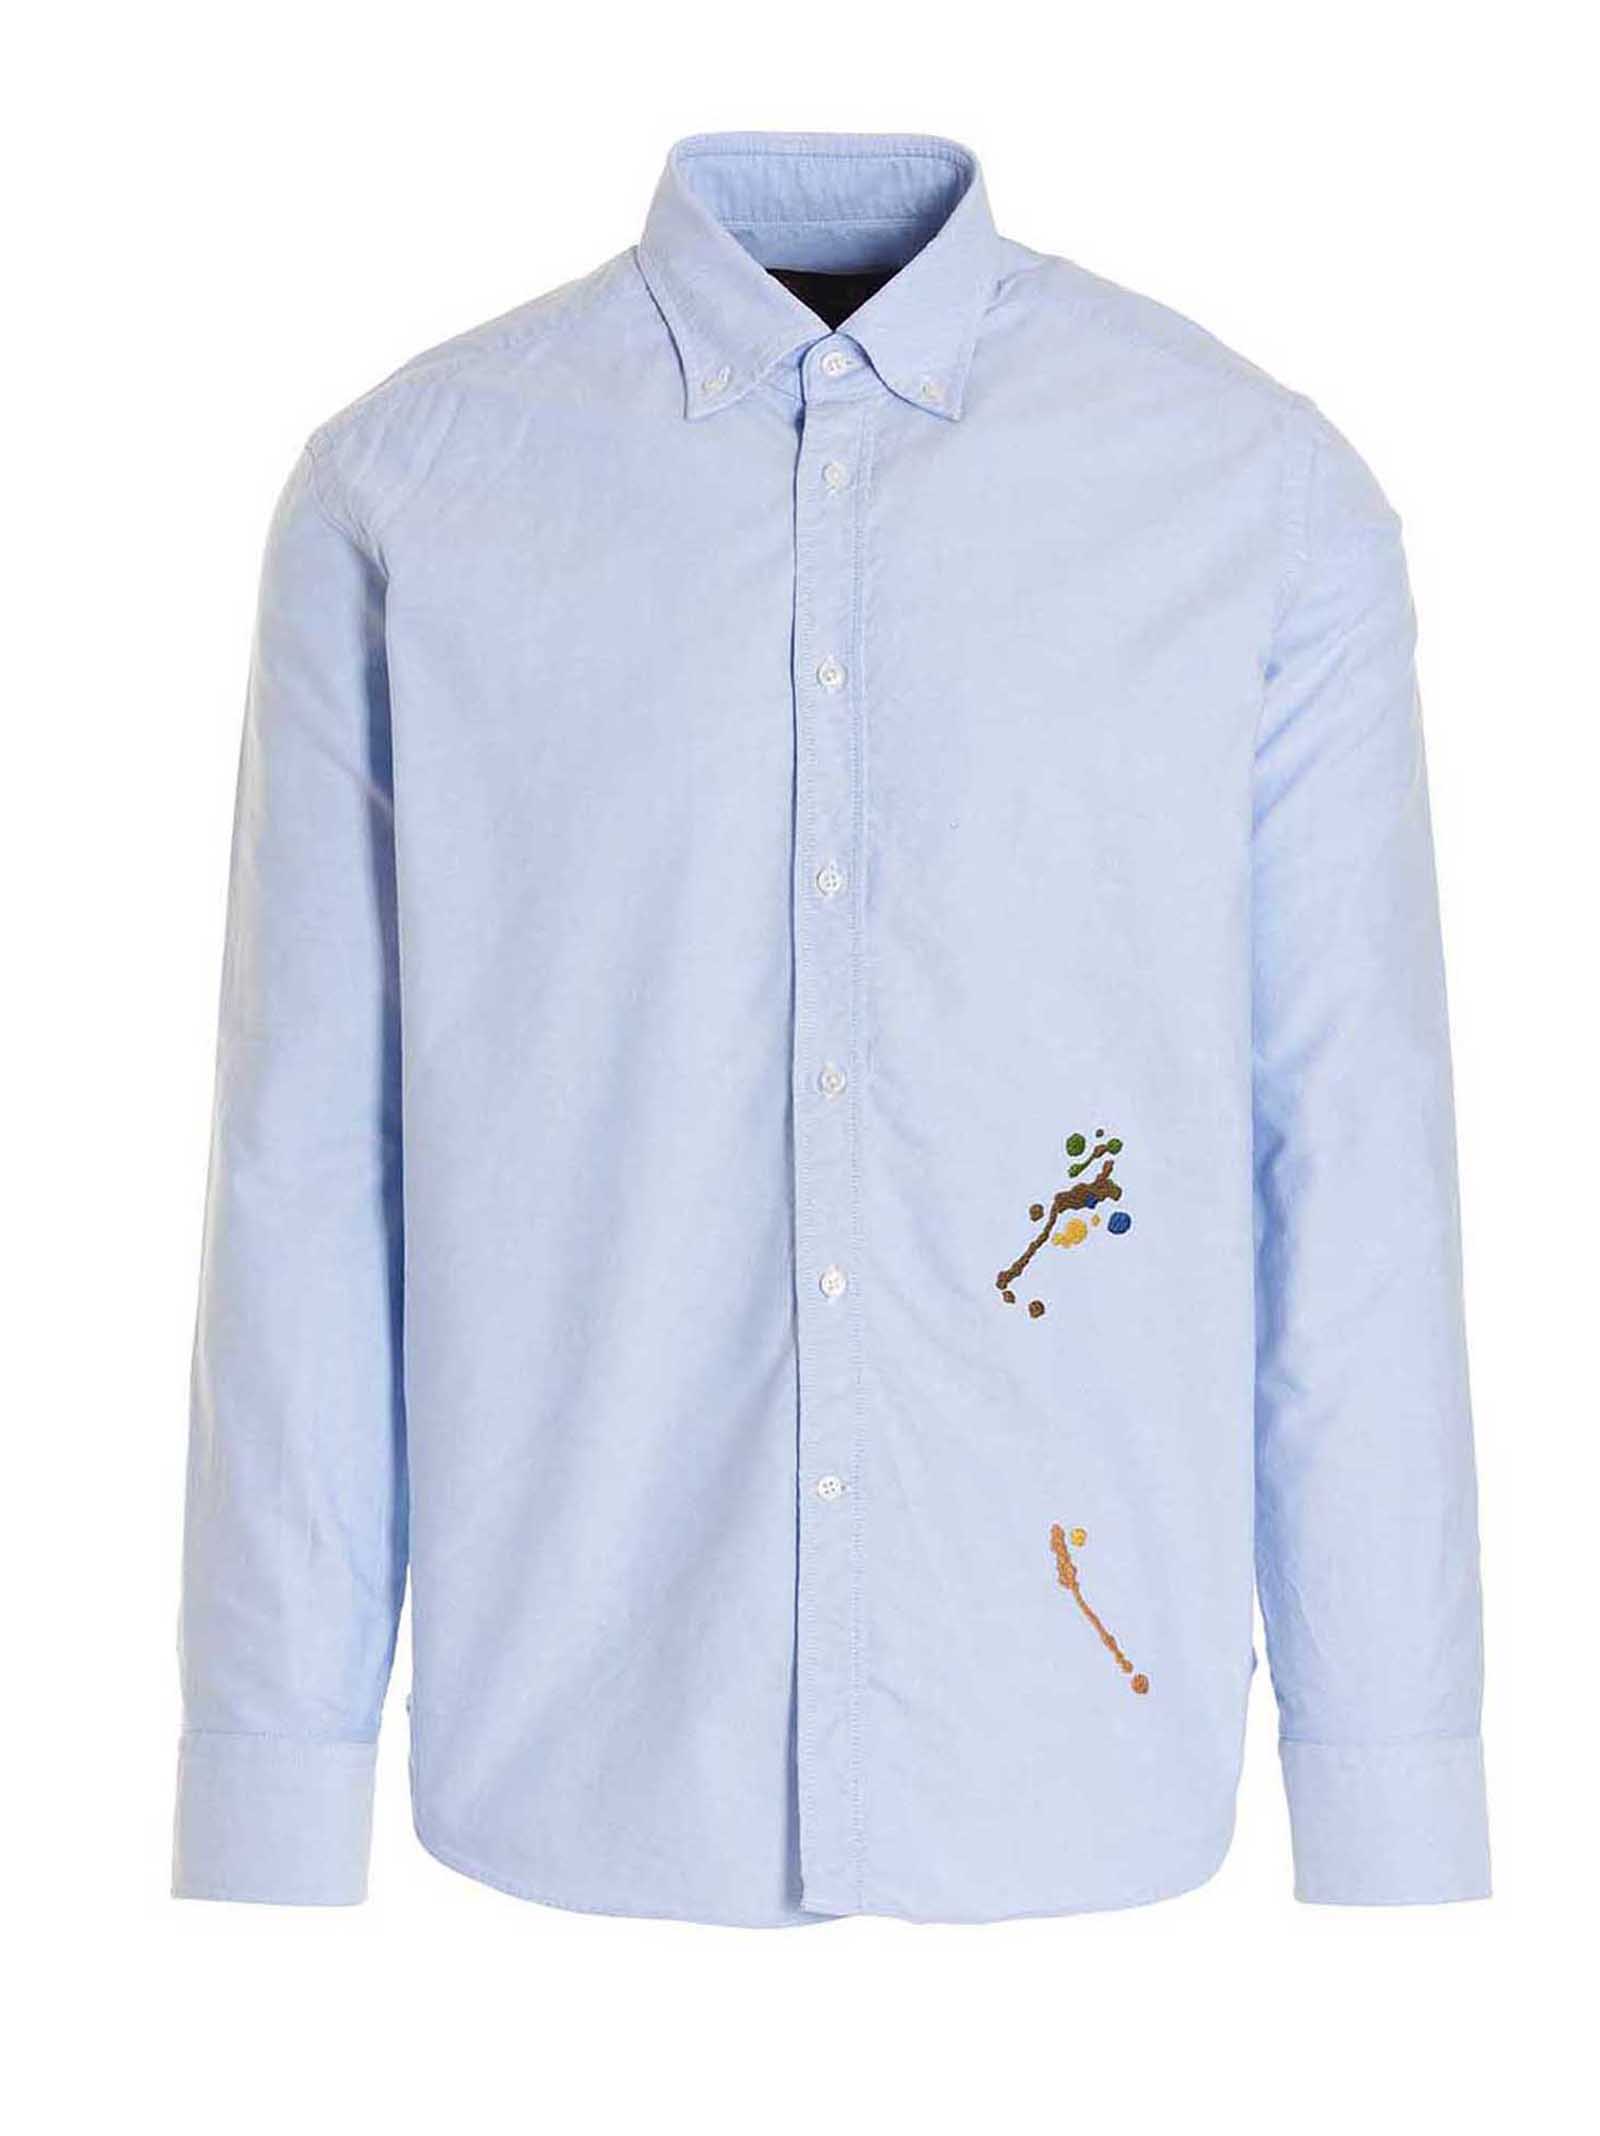 Baracuta X Slowboy Embroidery Shirt